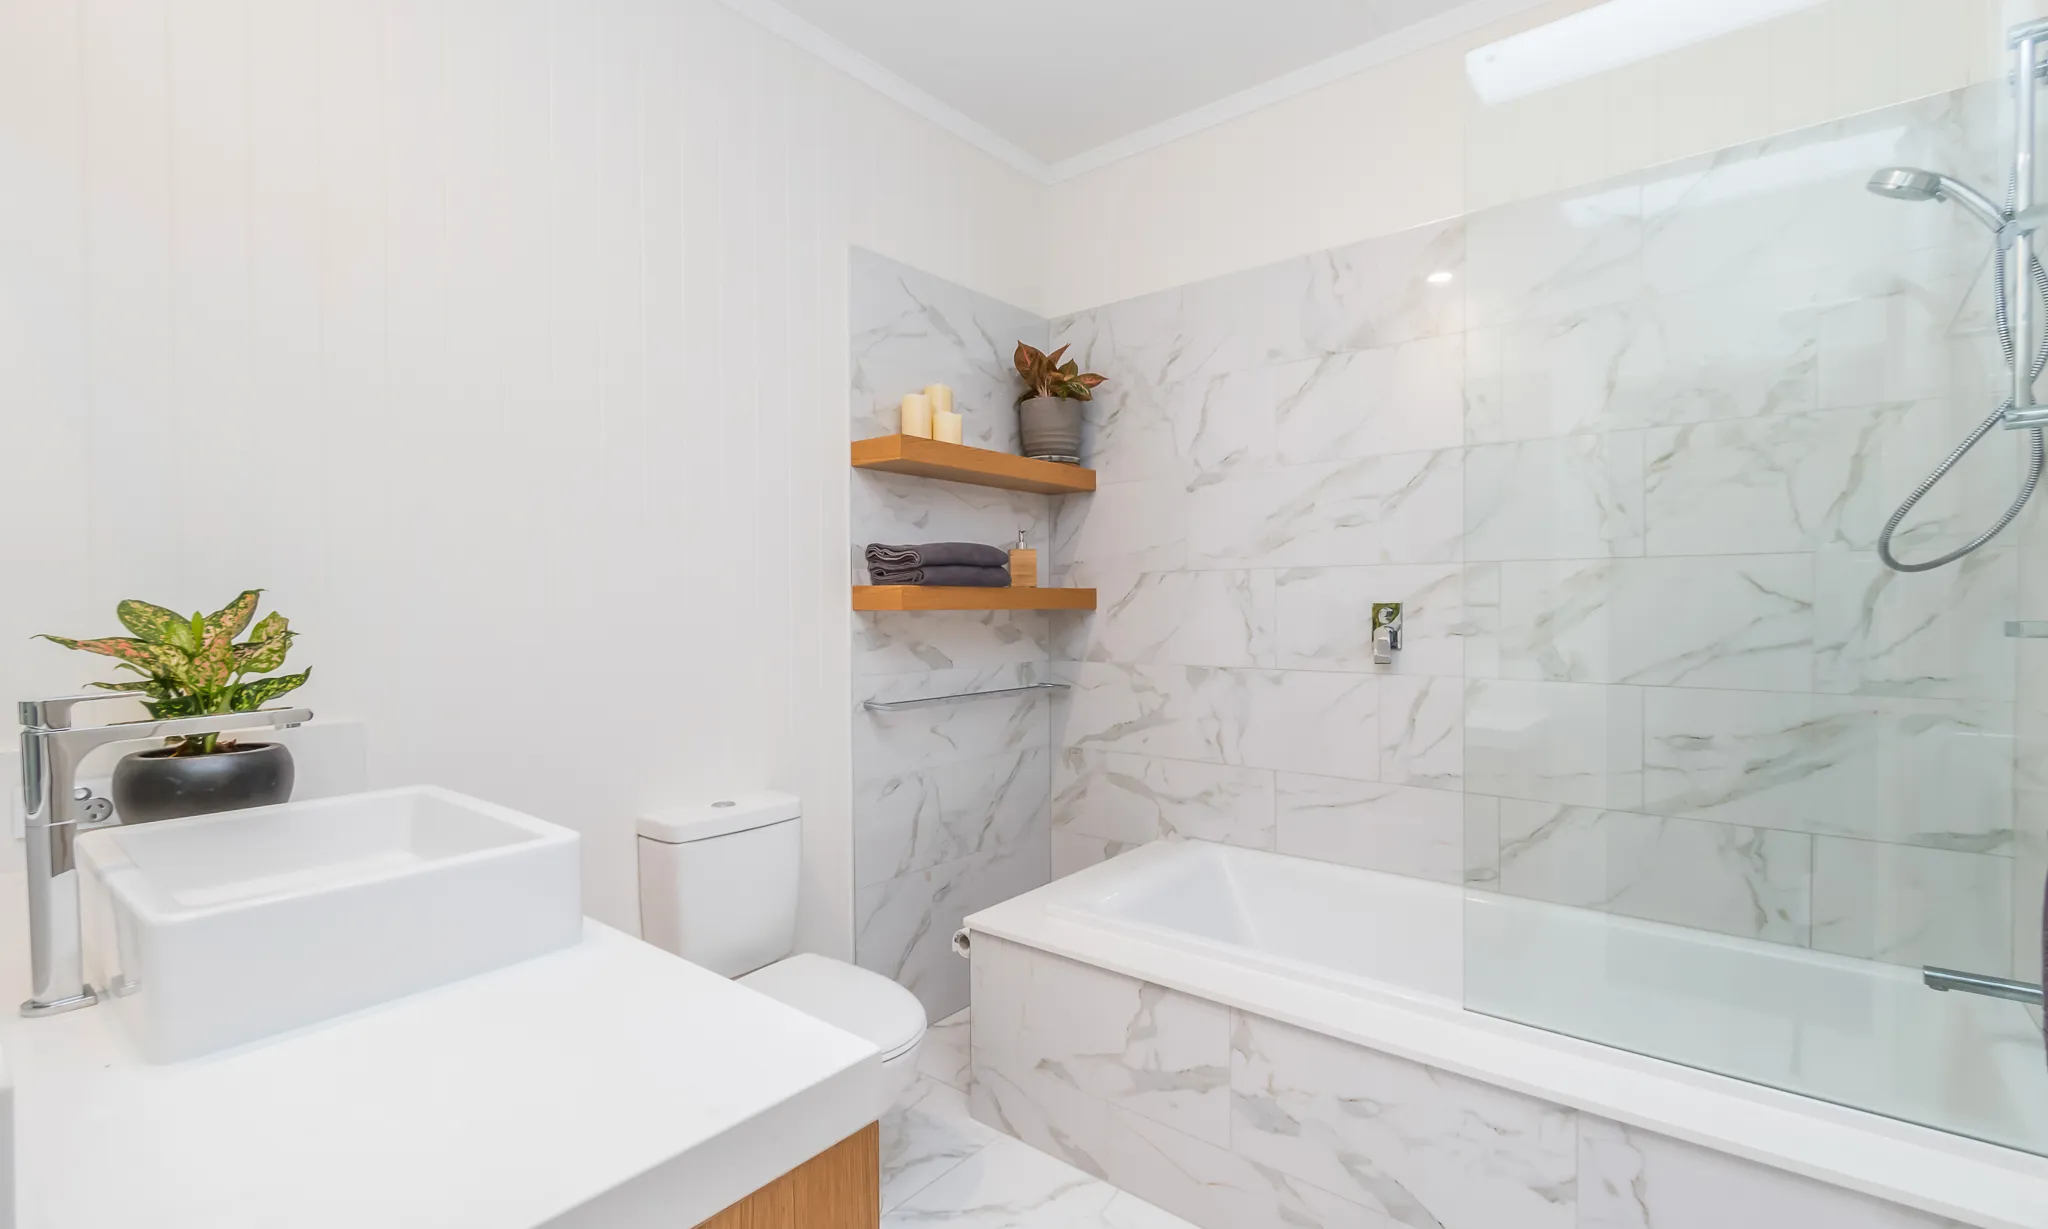 Bathroom Renovation-VJ walls-marble tiles-timber vanity-builtin bath